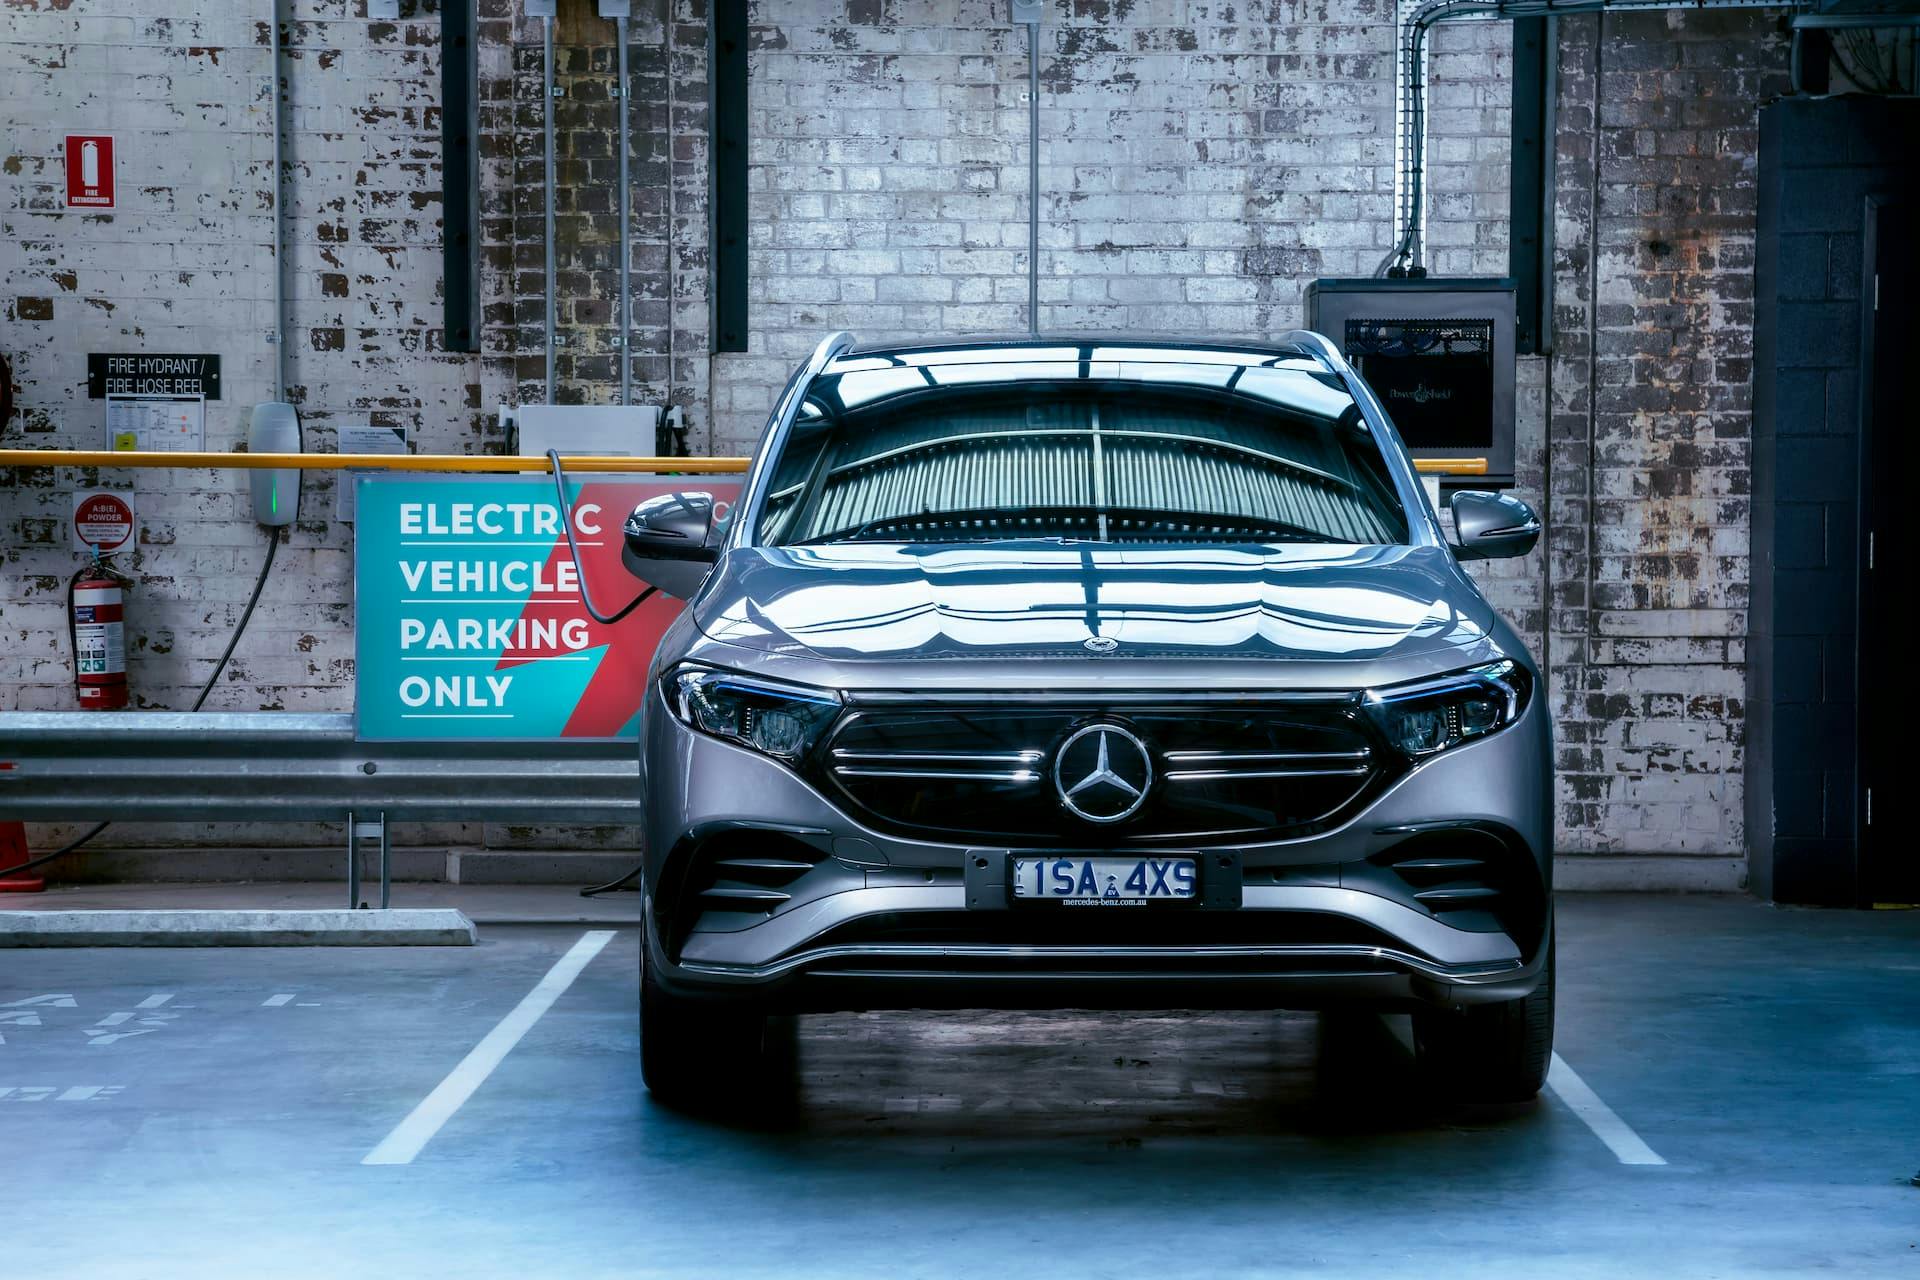 Mercedes-Benz EQA electric SUV in carpark charging spot